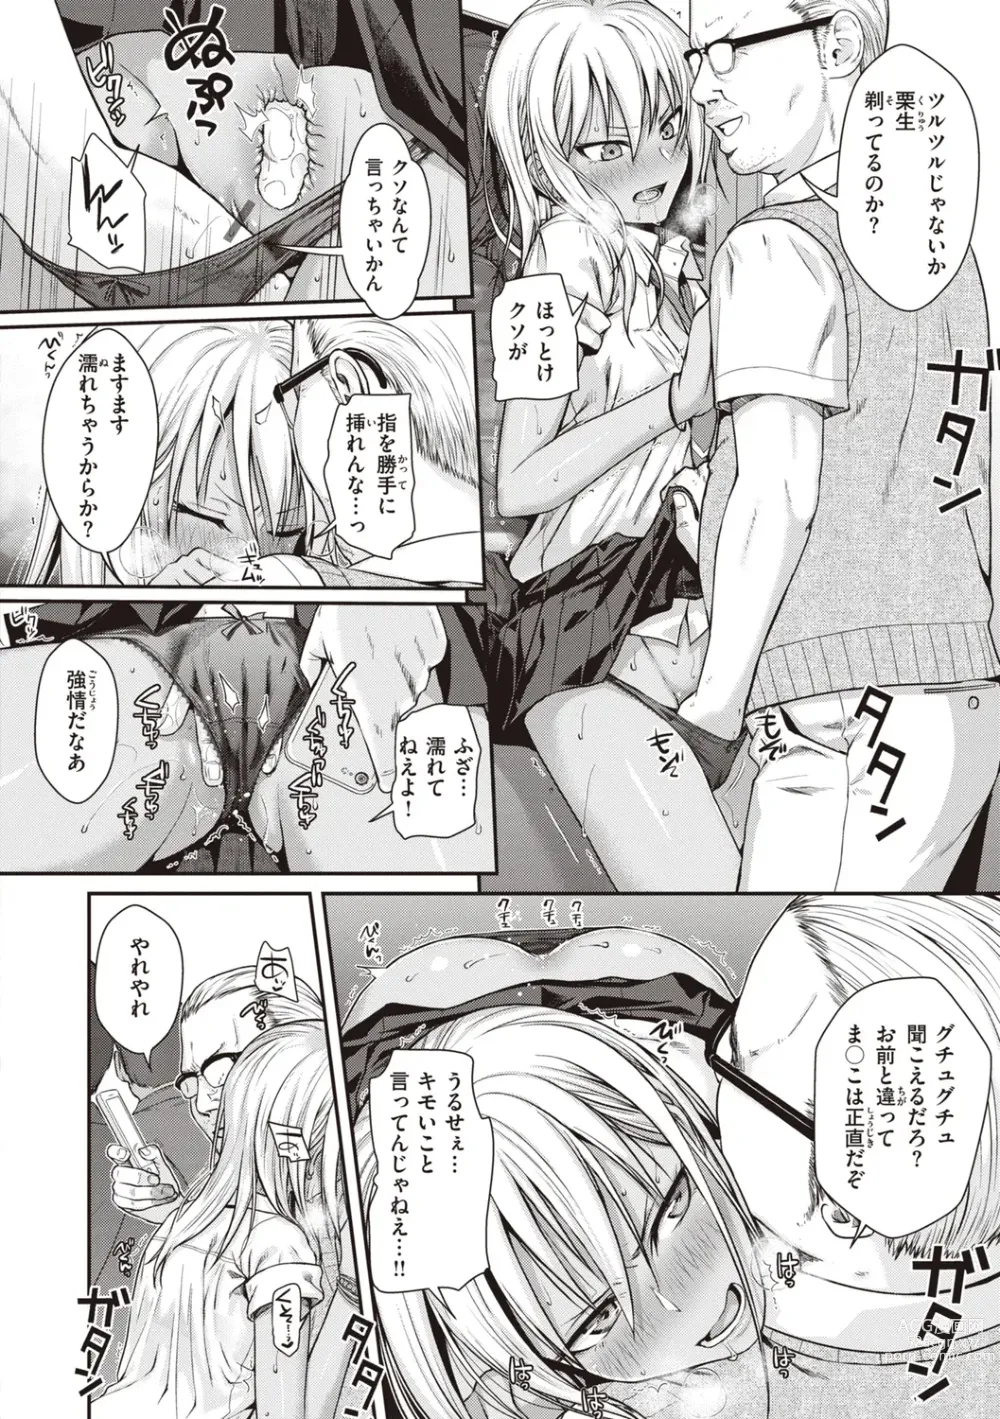 Page 16 of manga Prototype Teens